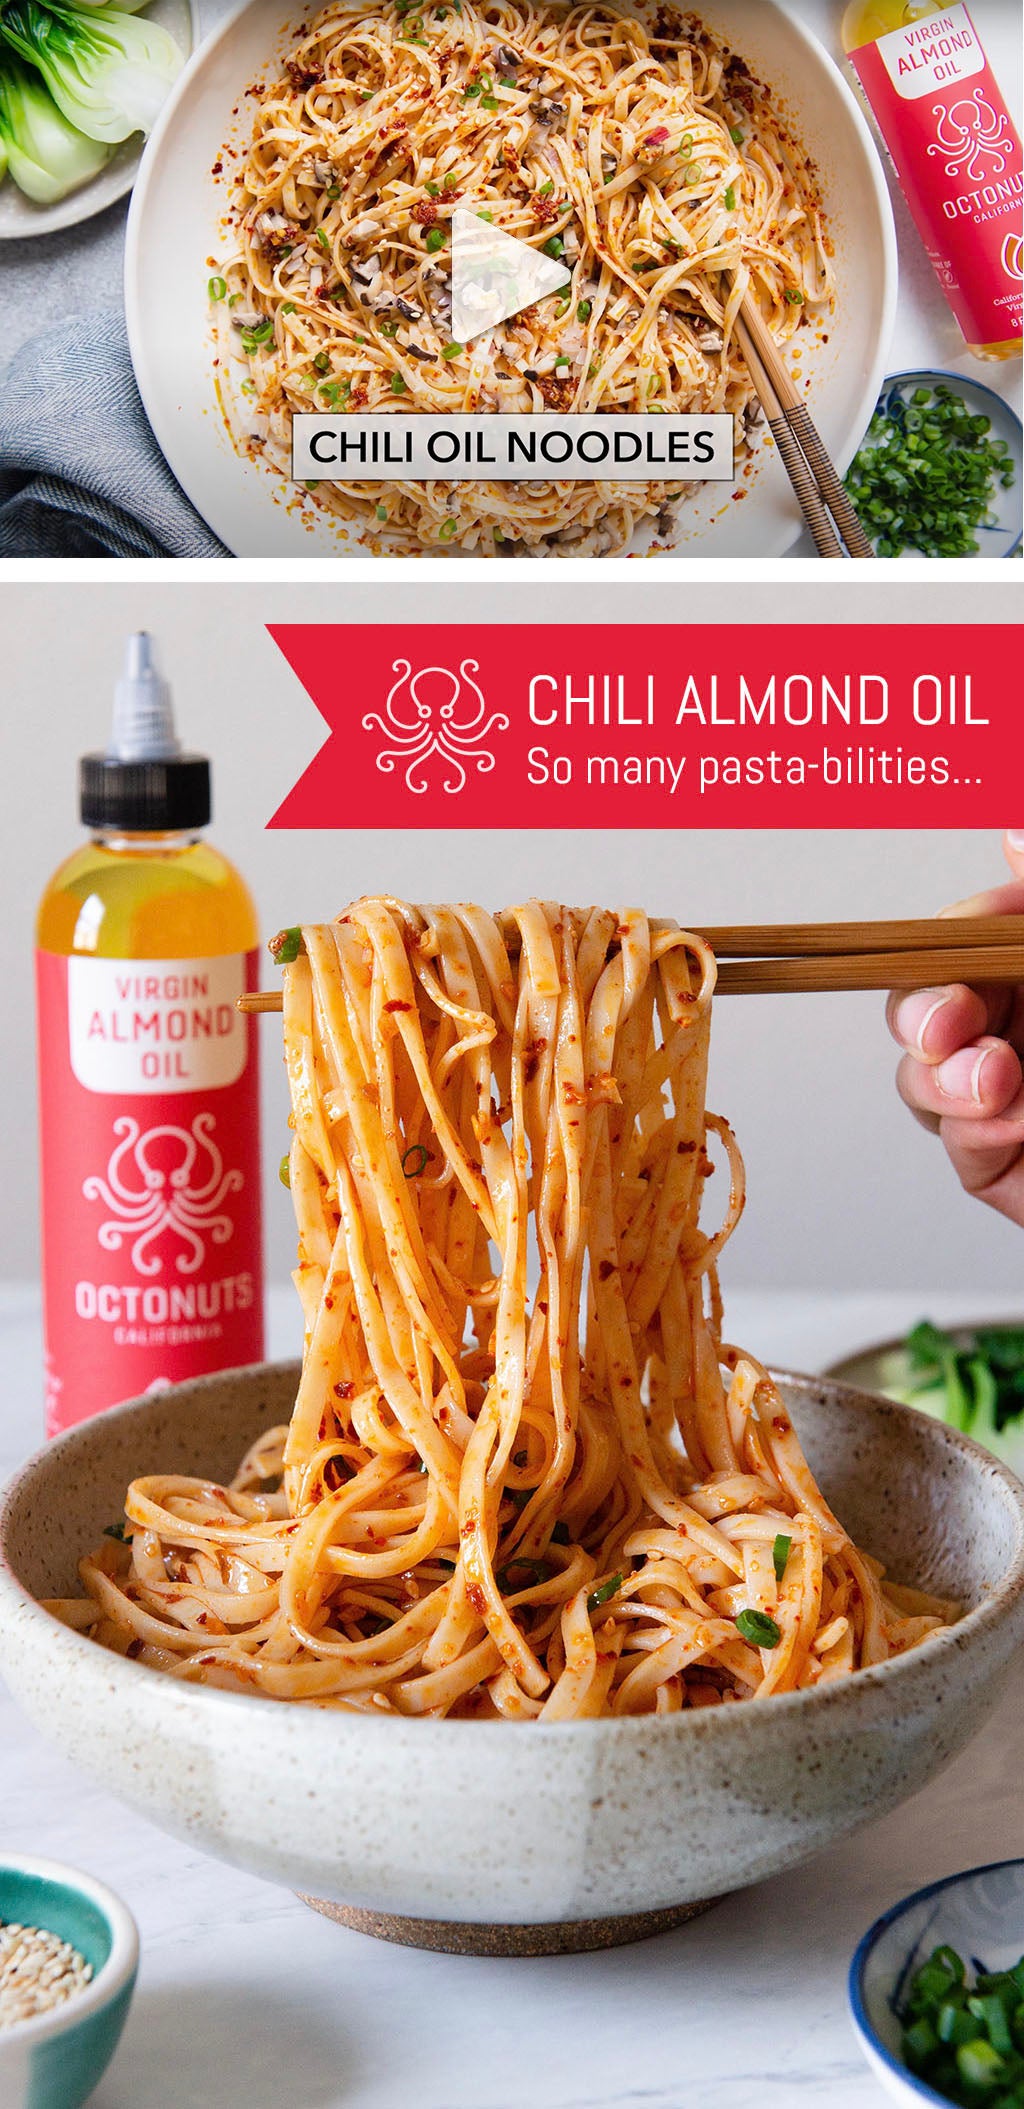 Octonuts Chili Almond Oil Noodles Recipe